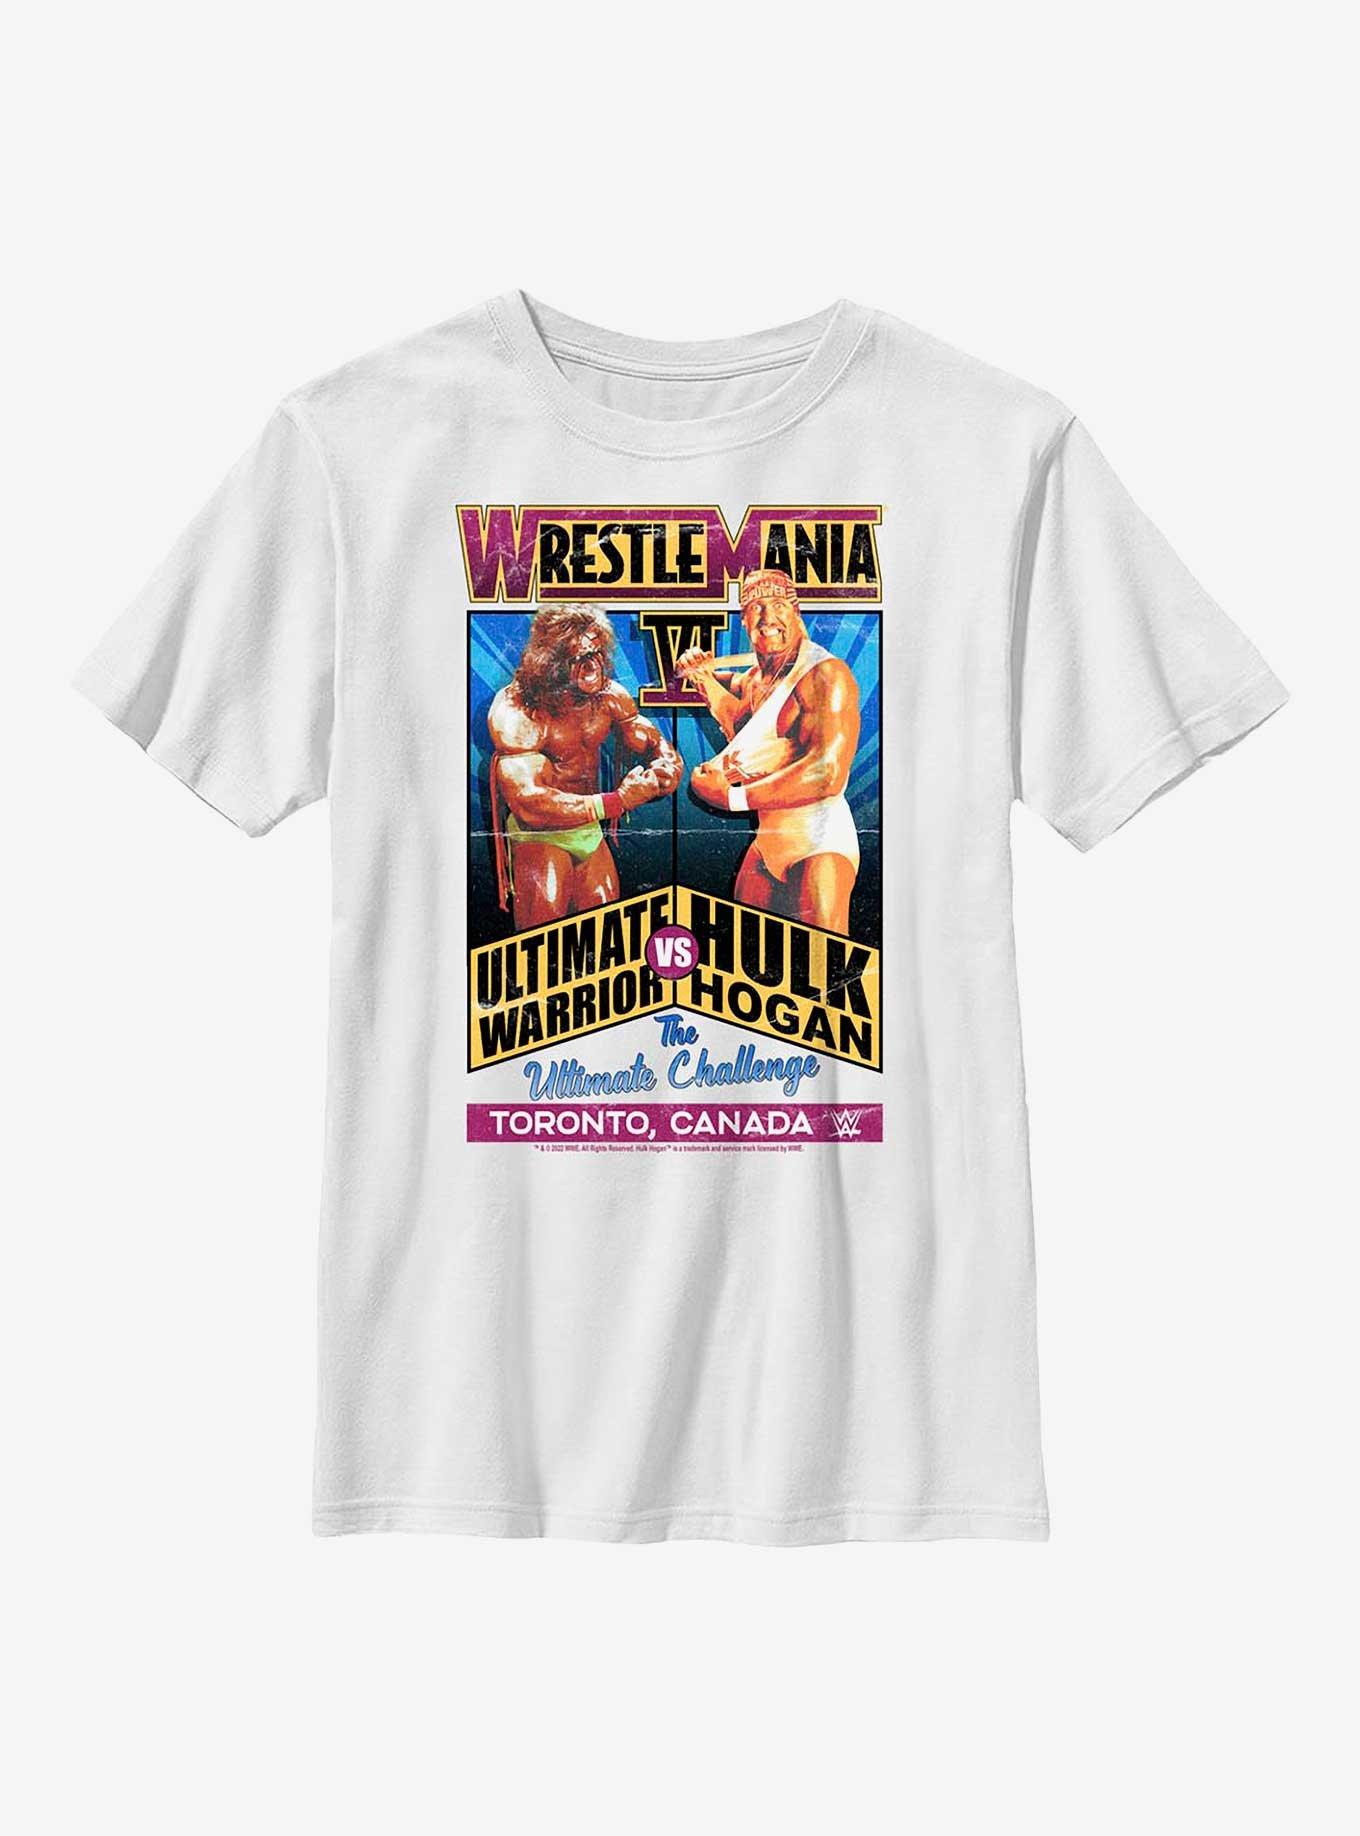 WWE WrestleMania 6 The Ultimate Challenge Ultimate Warrior Vs. Hulk HoganYouth T-Shirt, WHITE, hi-res